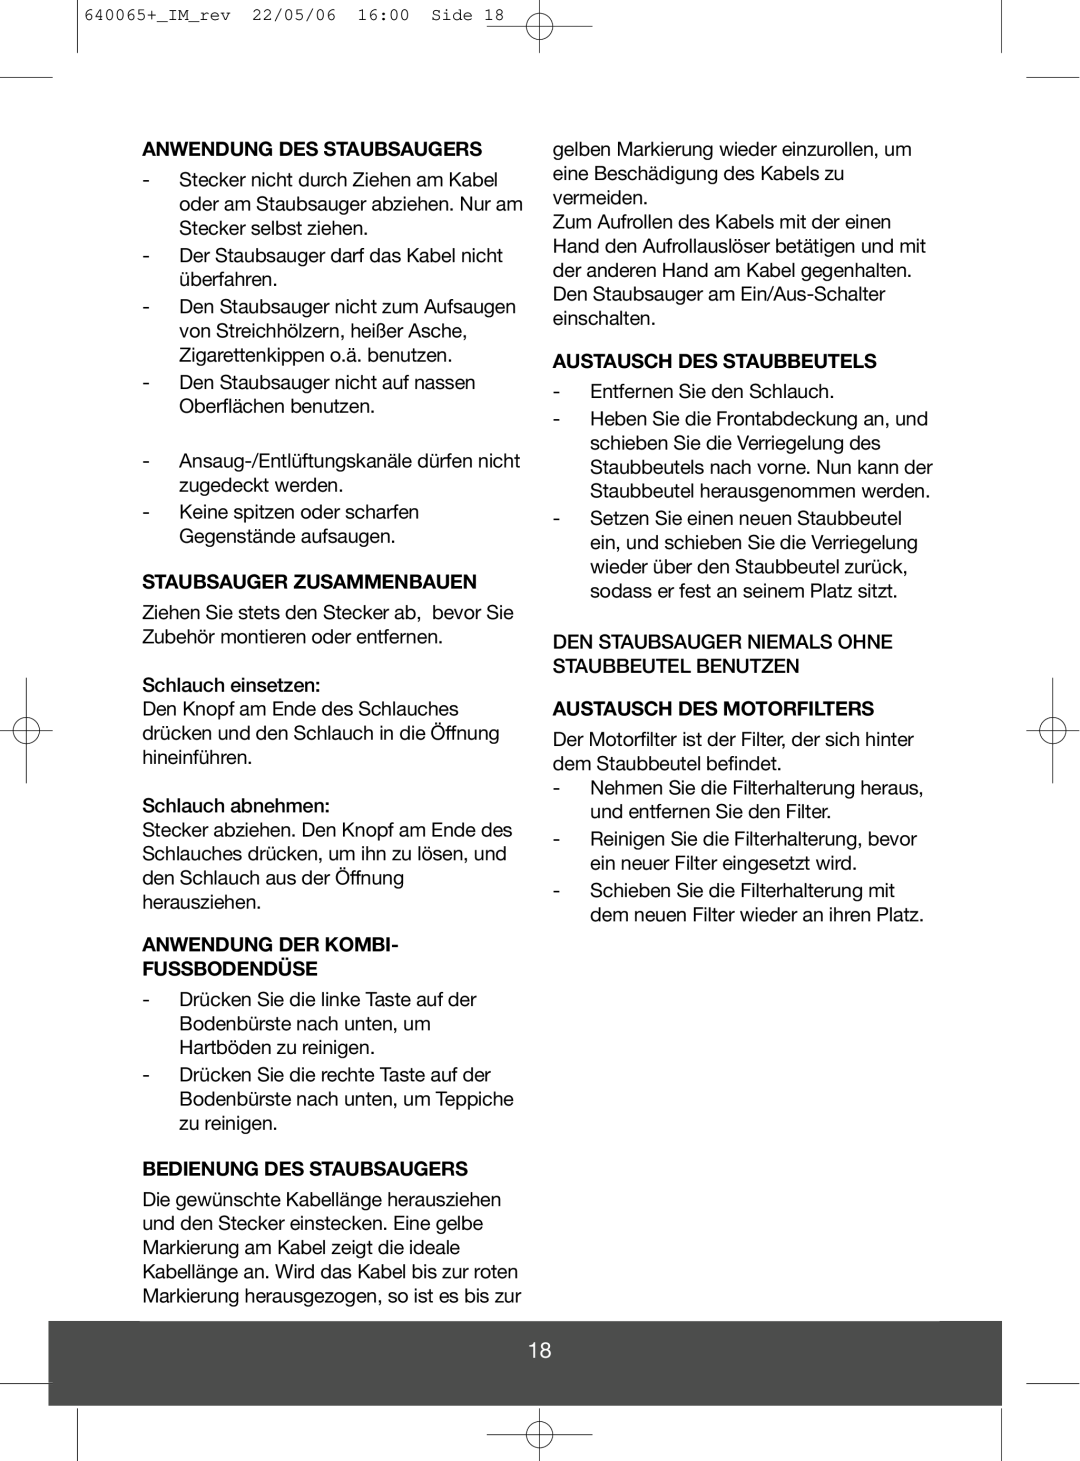 Melissa 640-113/115 manual Anwendung Des Staubsaugers, Staubsauger Zusammenbauen, Anwendung Der Kombi Fussbodendüse 